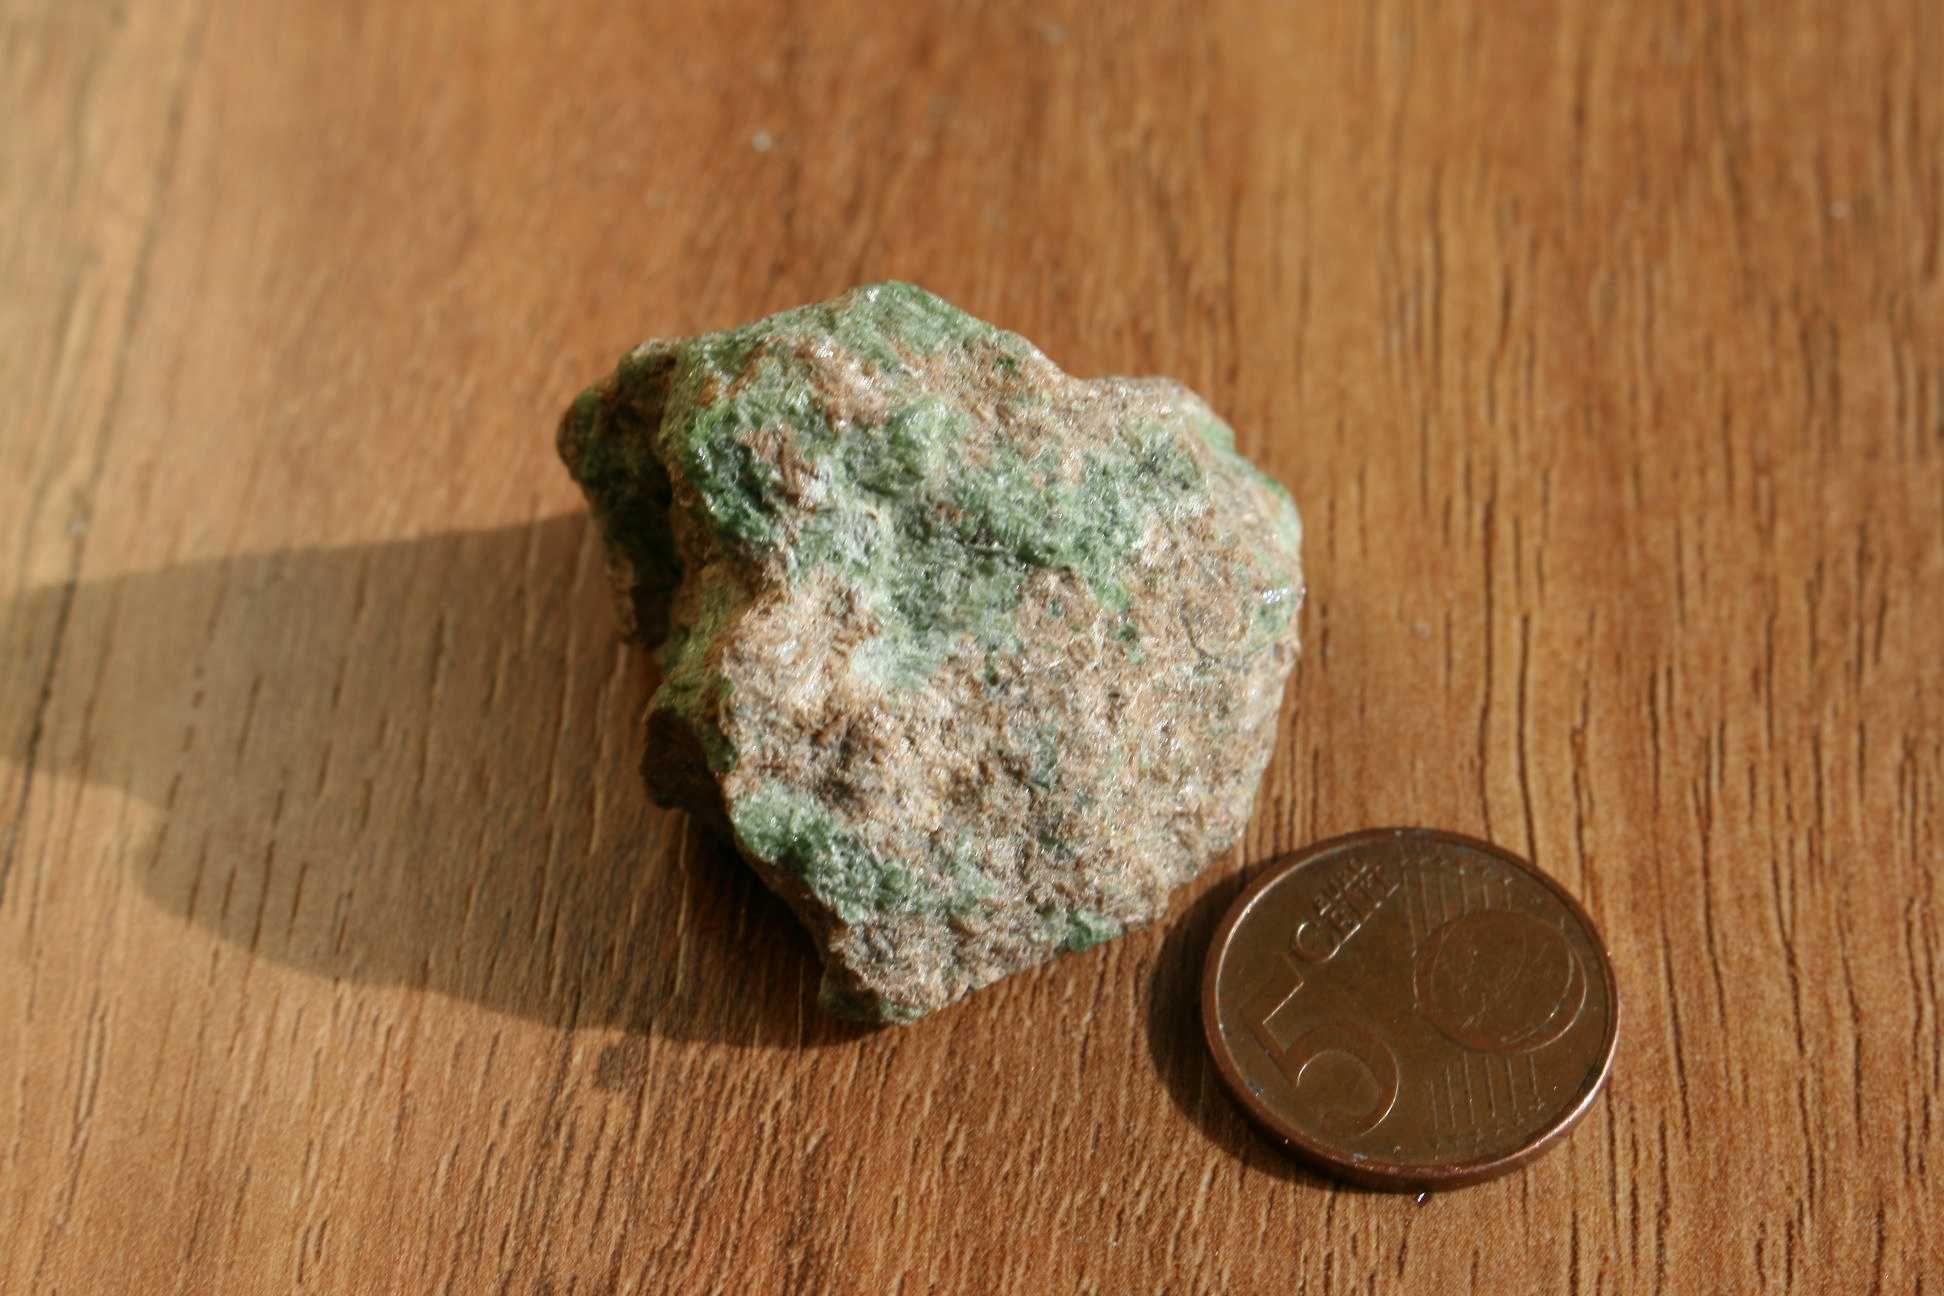 Minerais Moscovite, biotite, clorite, fuchsite e actinolite inc. envio